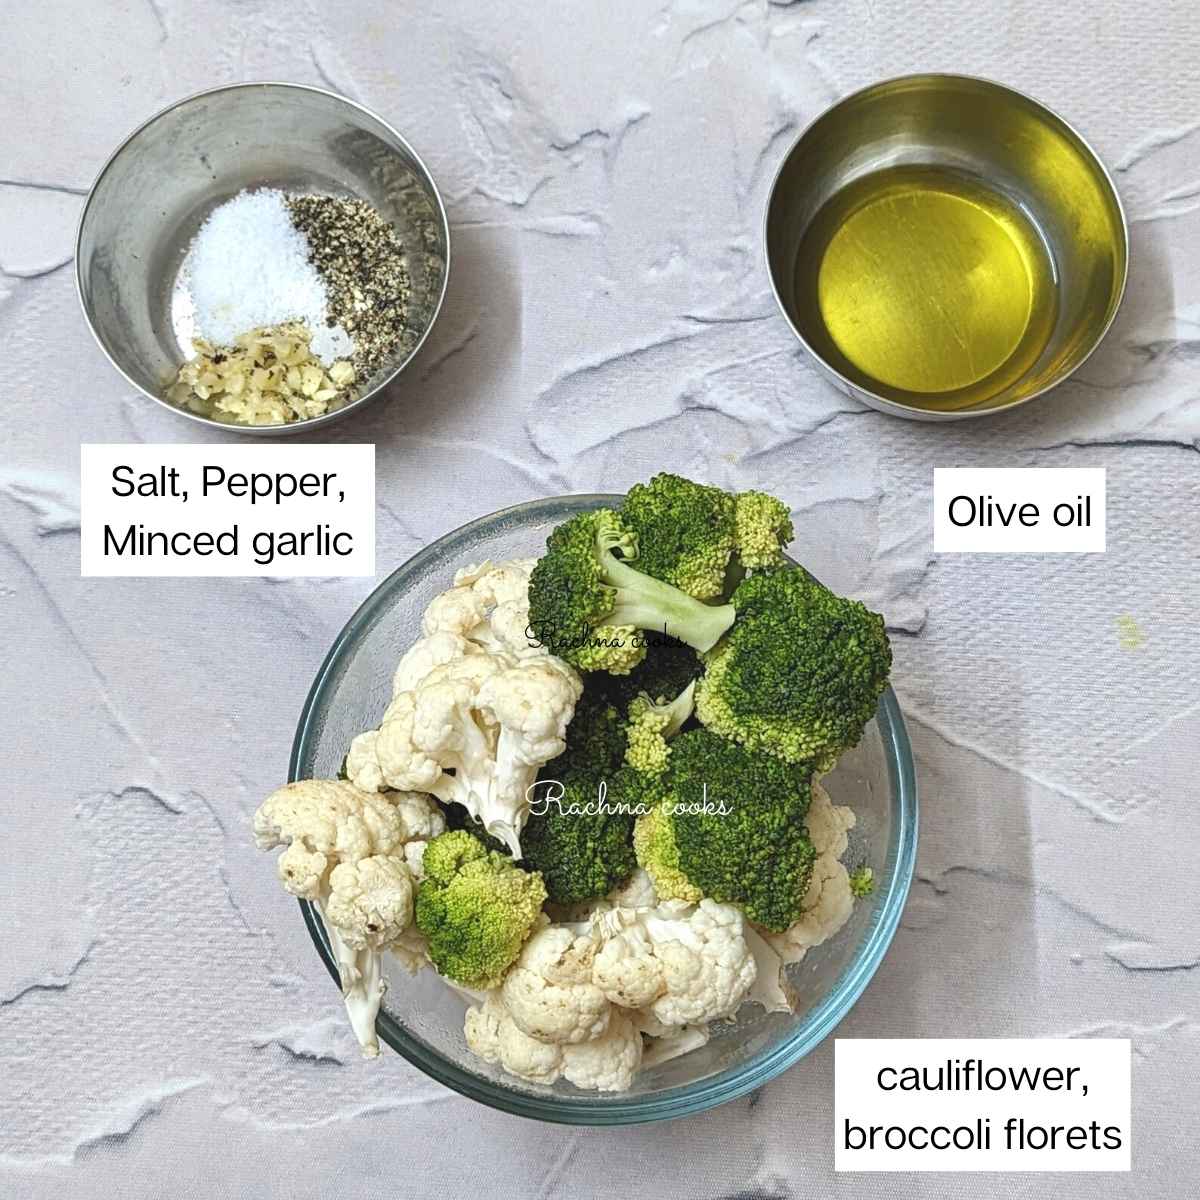 cauliflower, broccoli florets, olive oil, salt, pepper and minced garlic in bowls.